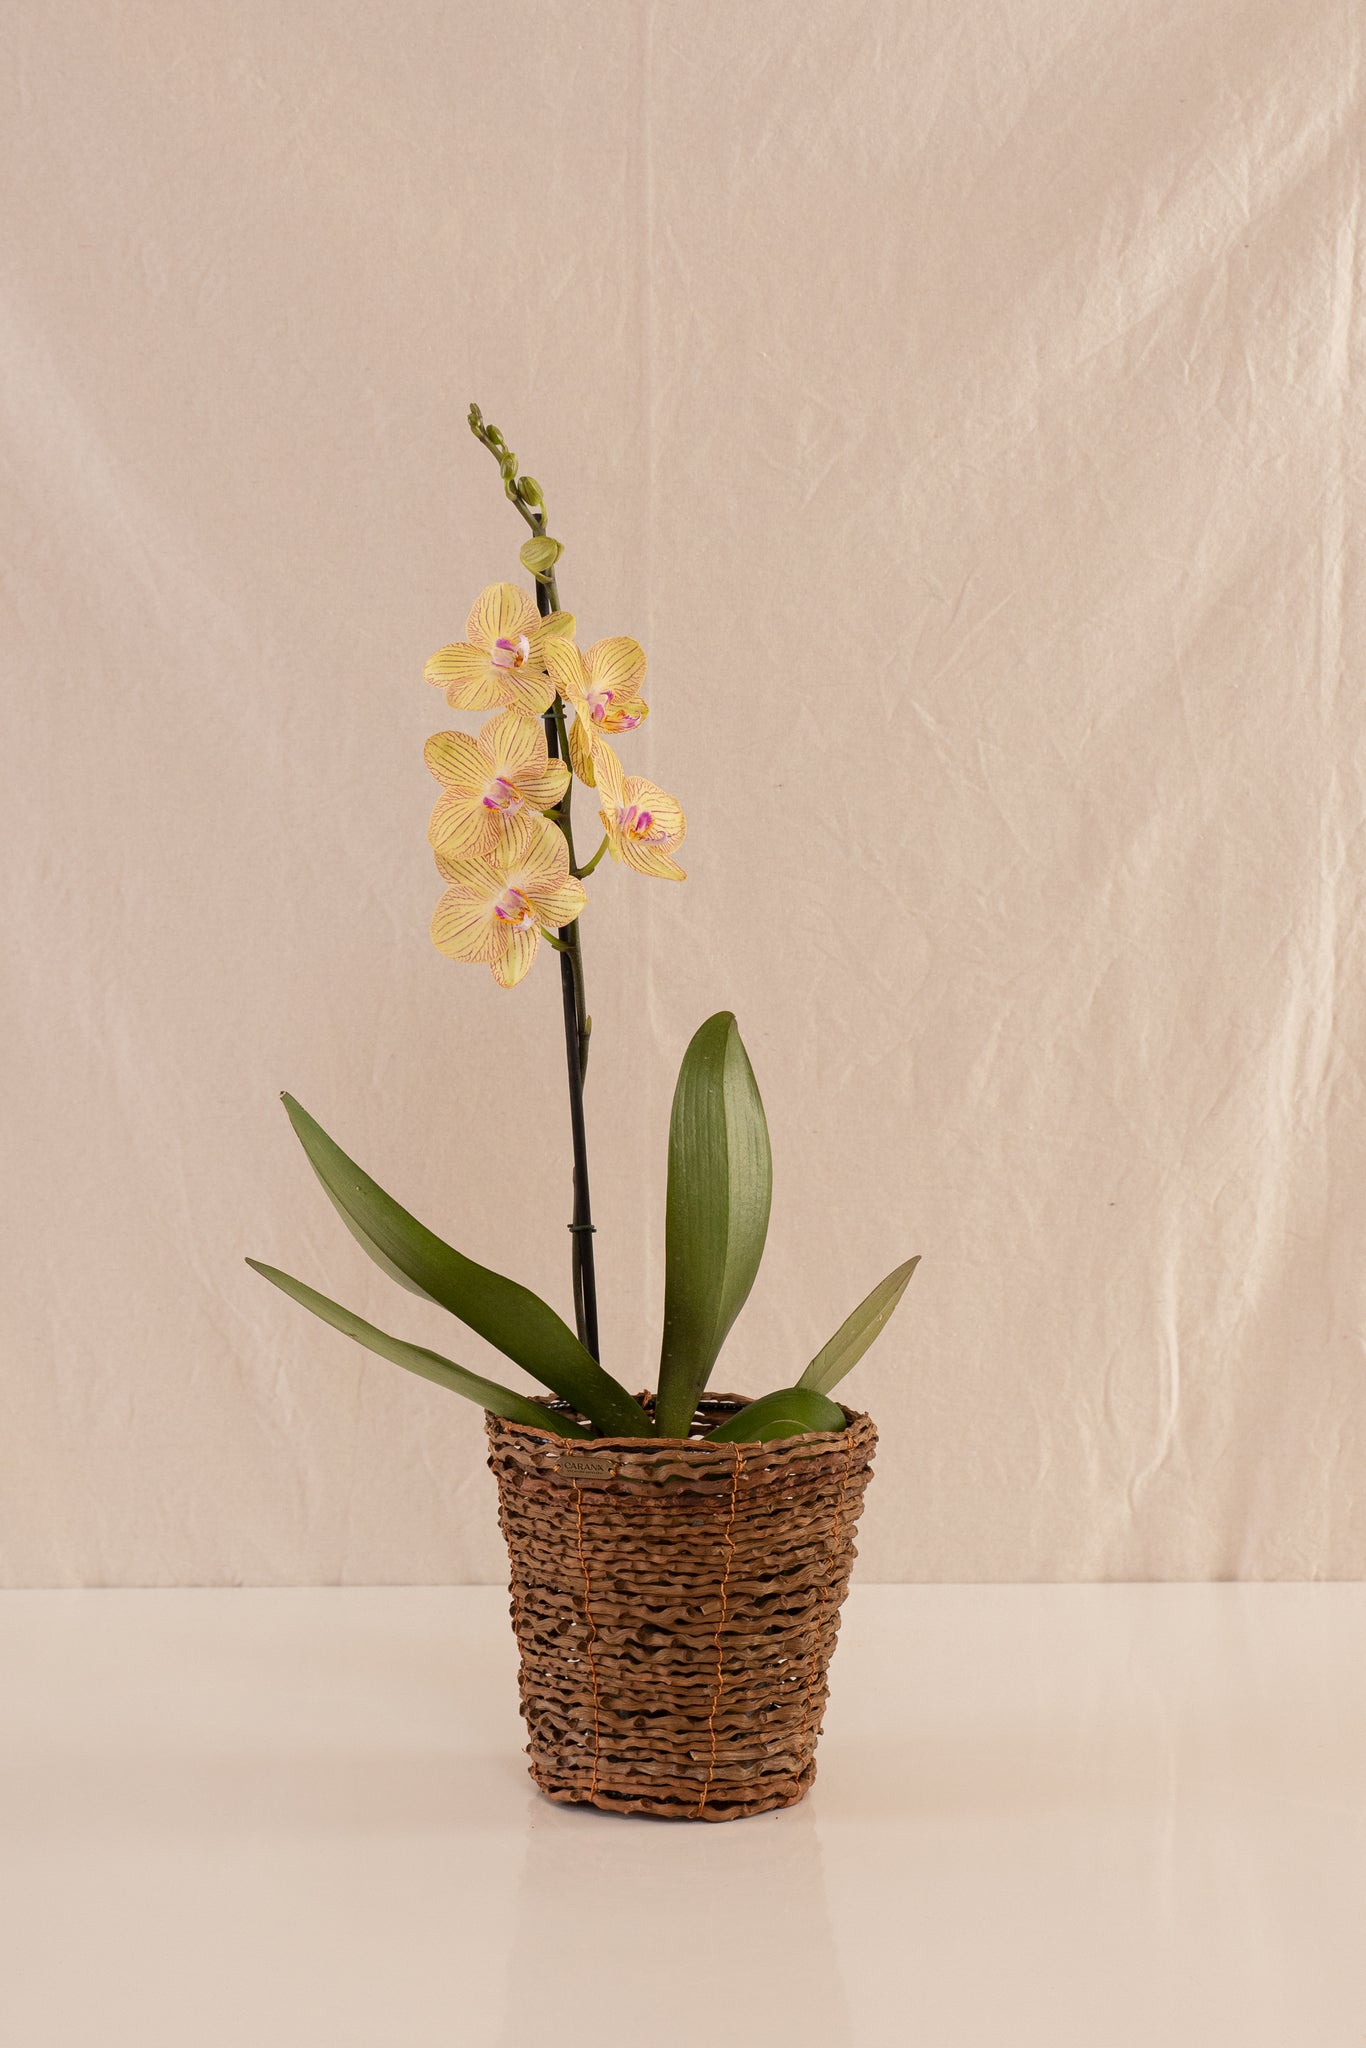 Orquídea Phalaenopsis de 1 Tallo Bicolor Amarilla con Rayas Fucsia